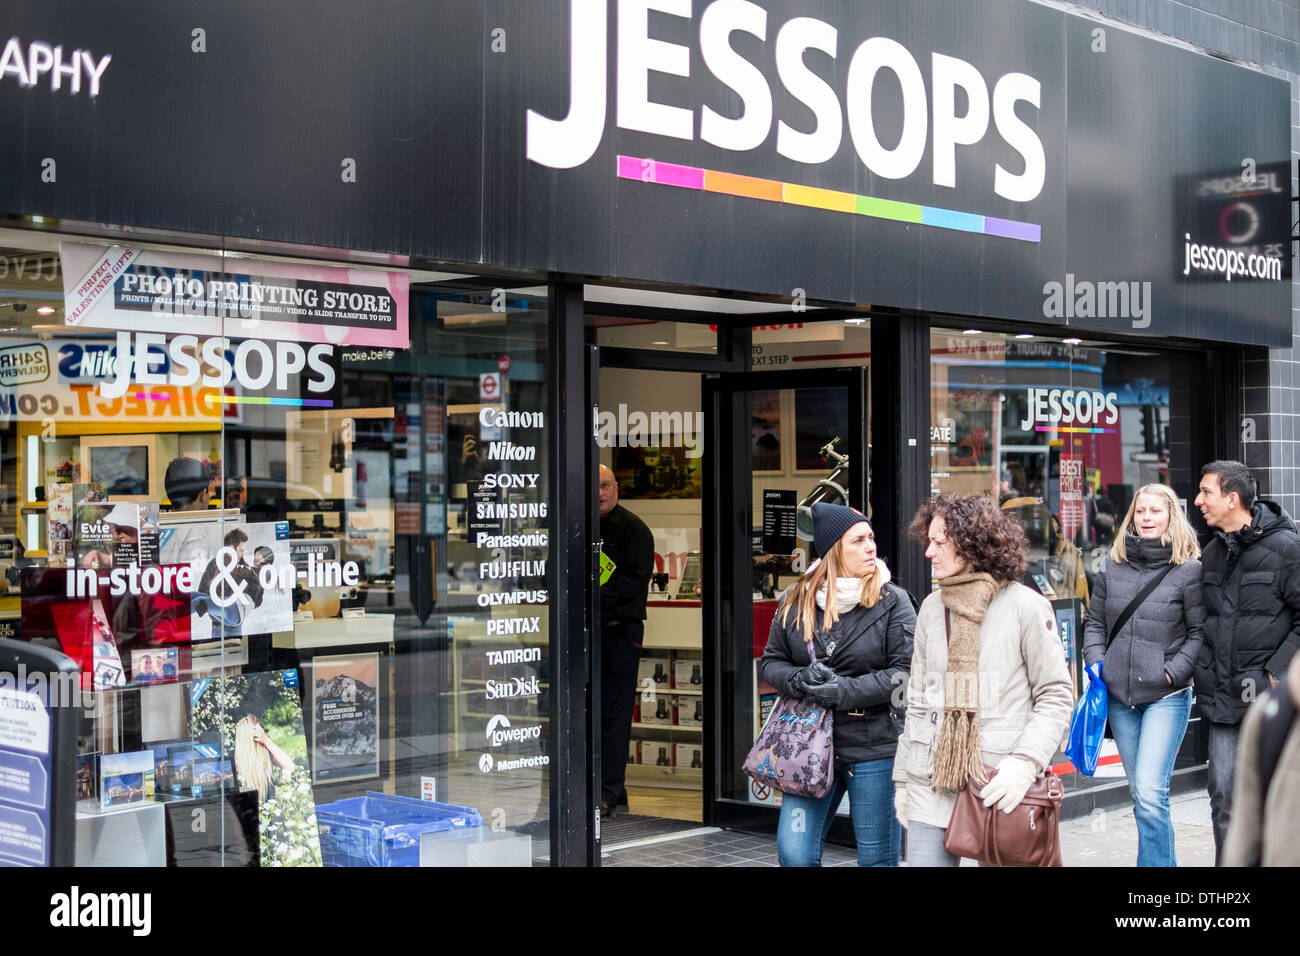 Jessops photo shop on Oxford Street, London, United Kingdom Stock Photo